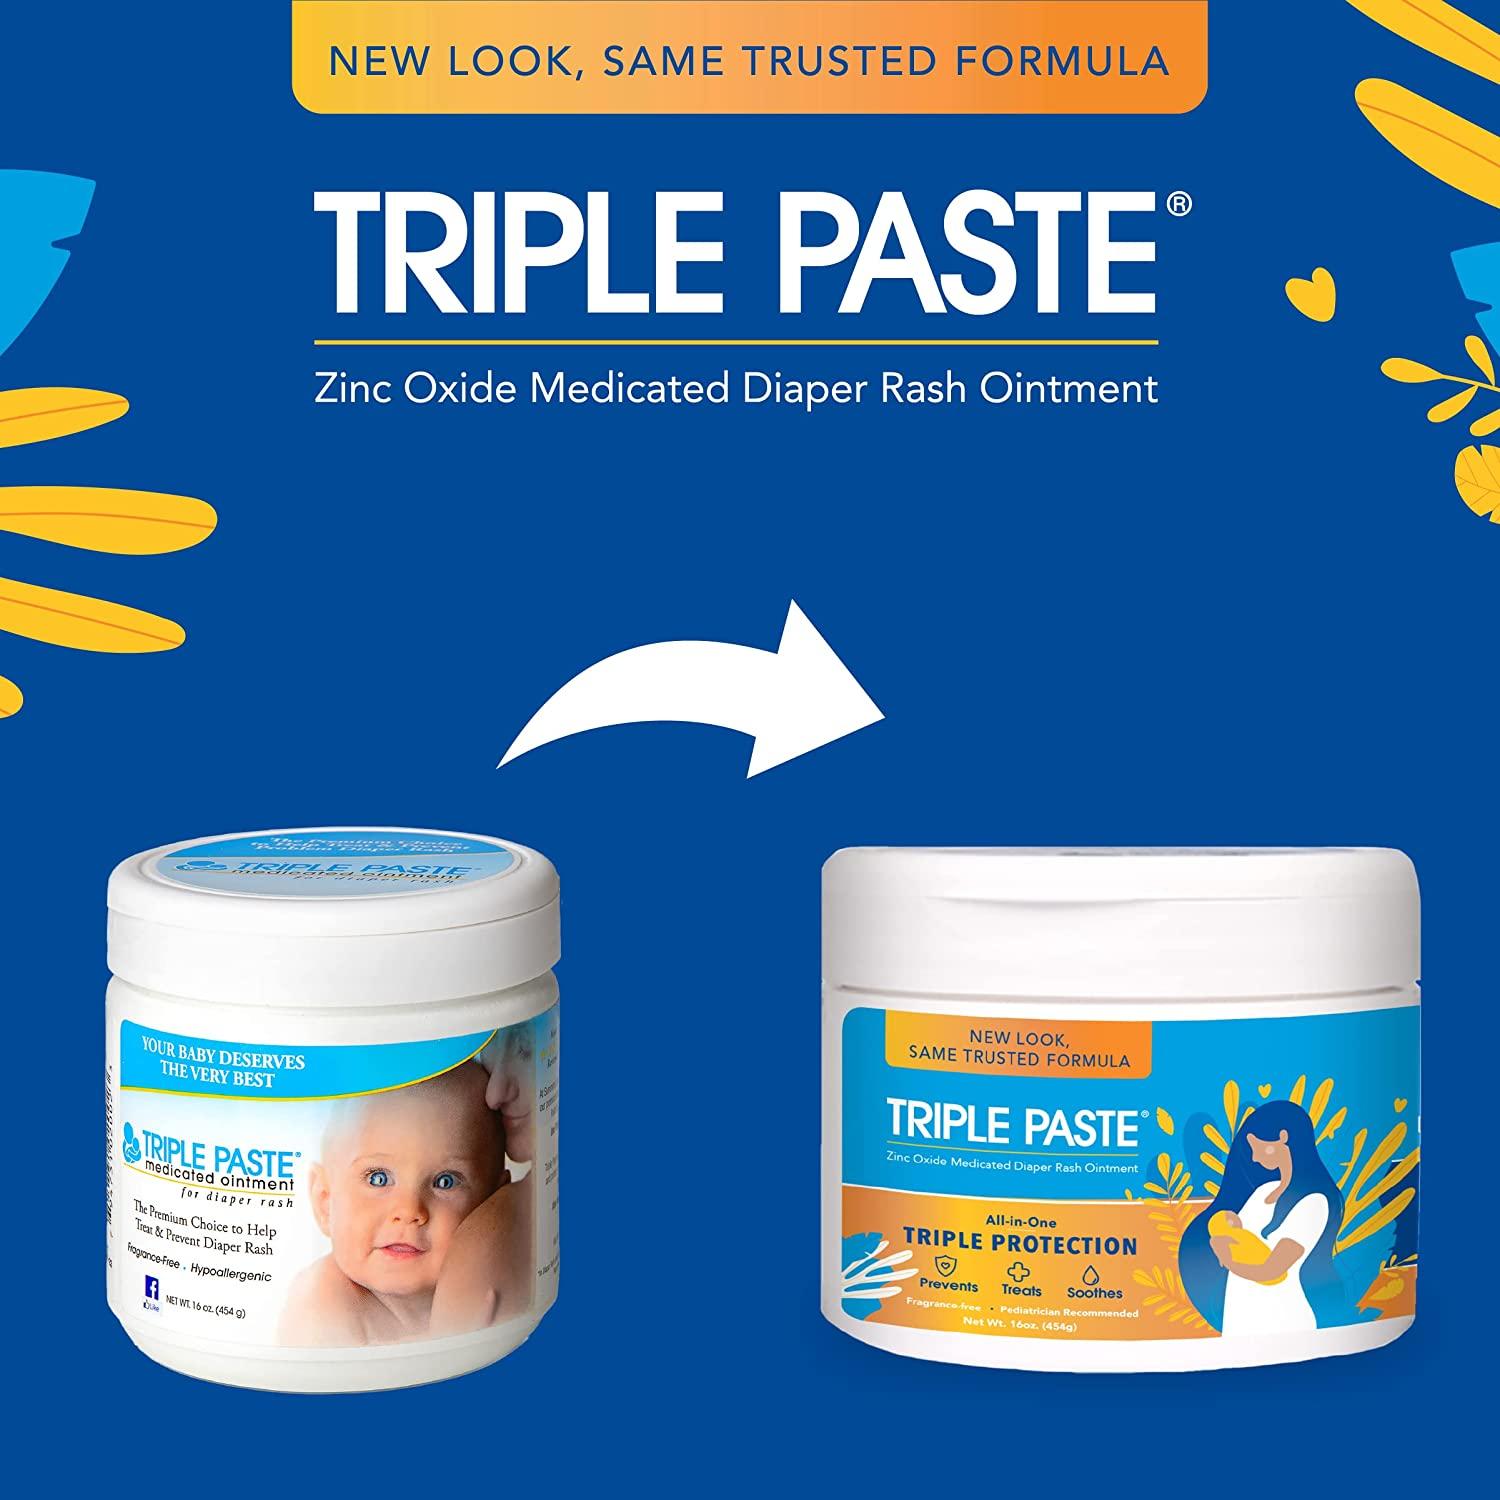 Triple Paste Baby Diaper Rash Cream (16 oz)